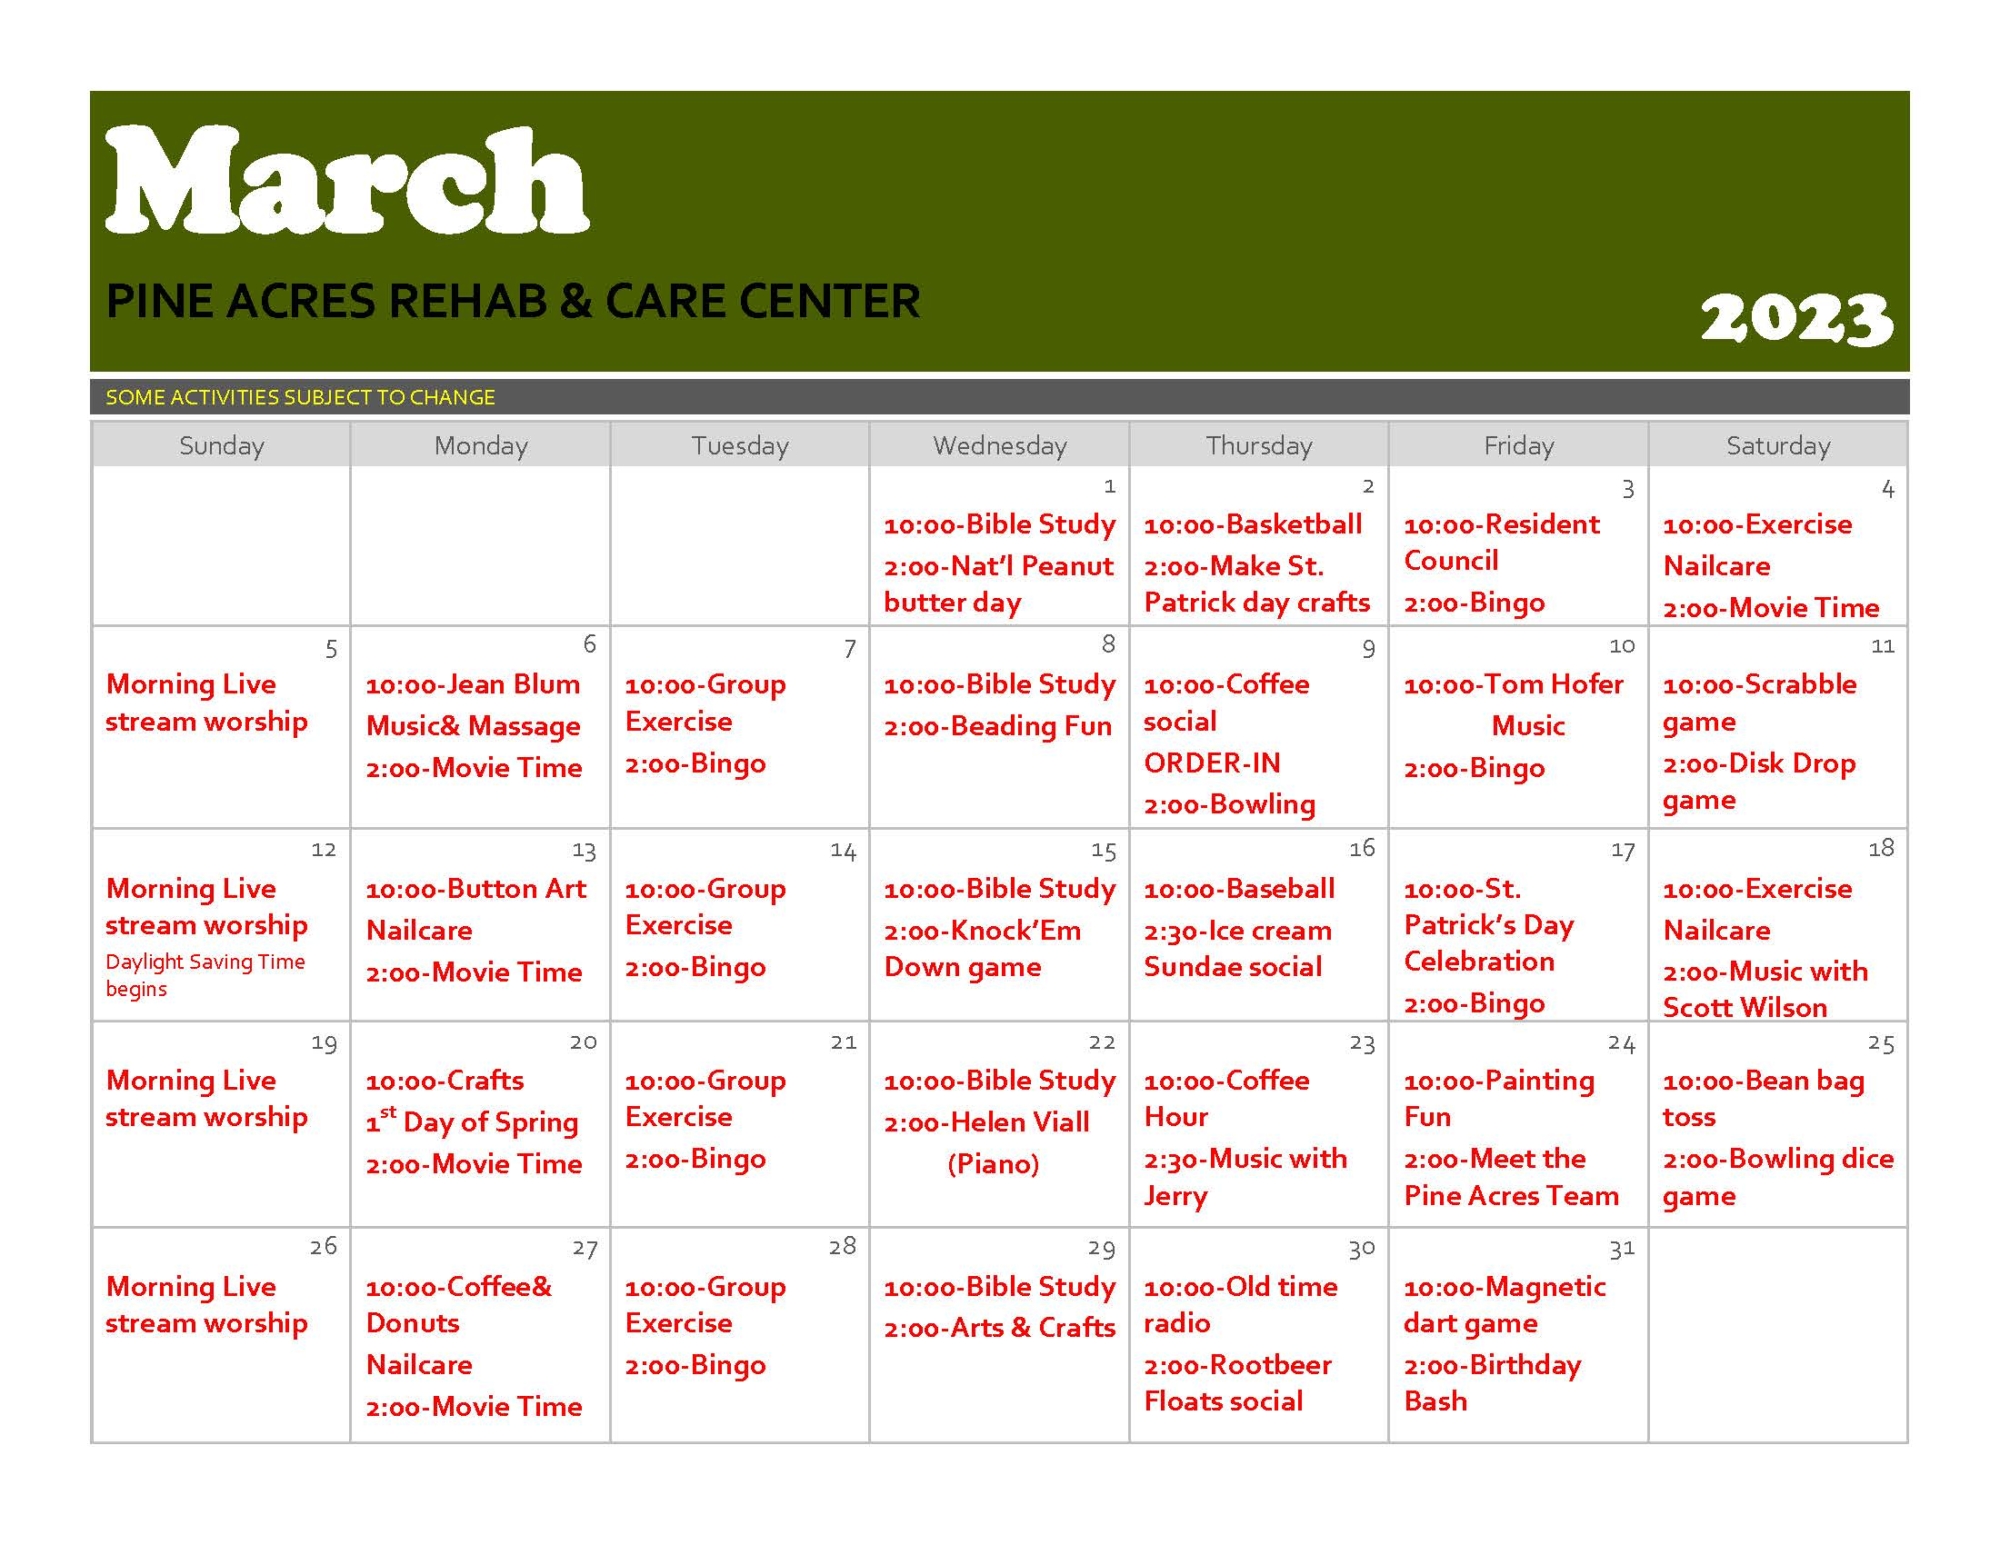 Pine Acres March 2023 Event Calendar